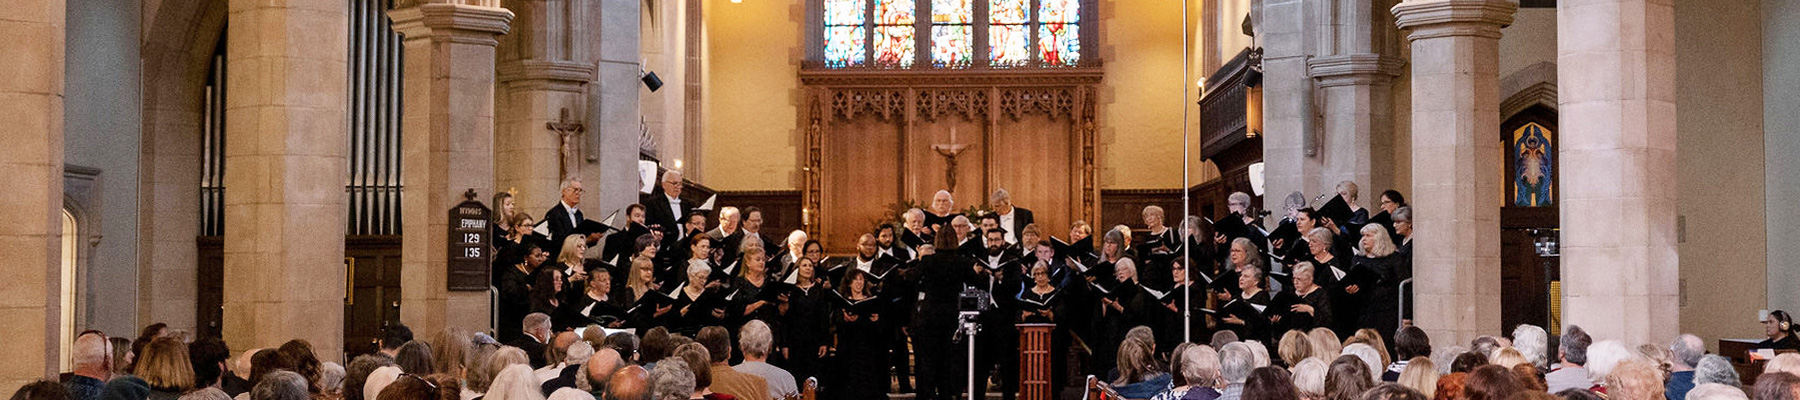 SB Choral members singing in a church